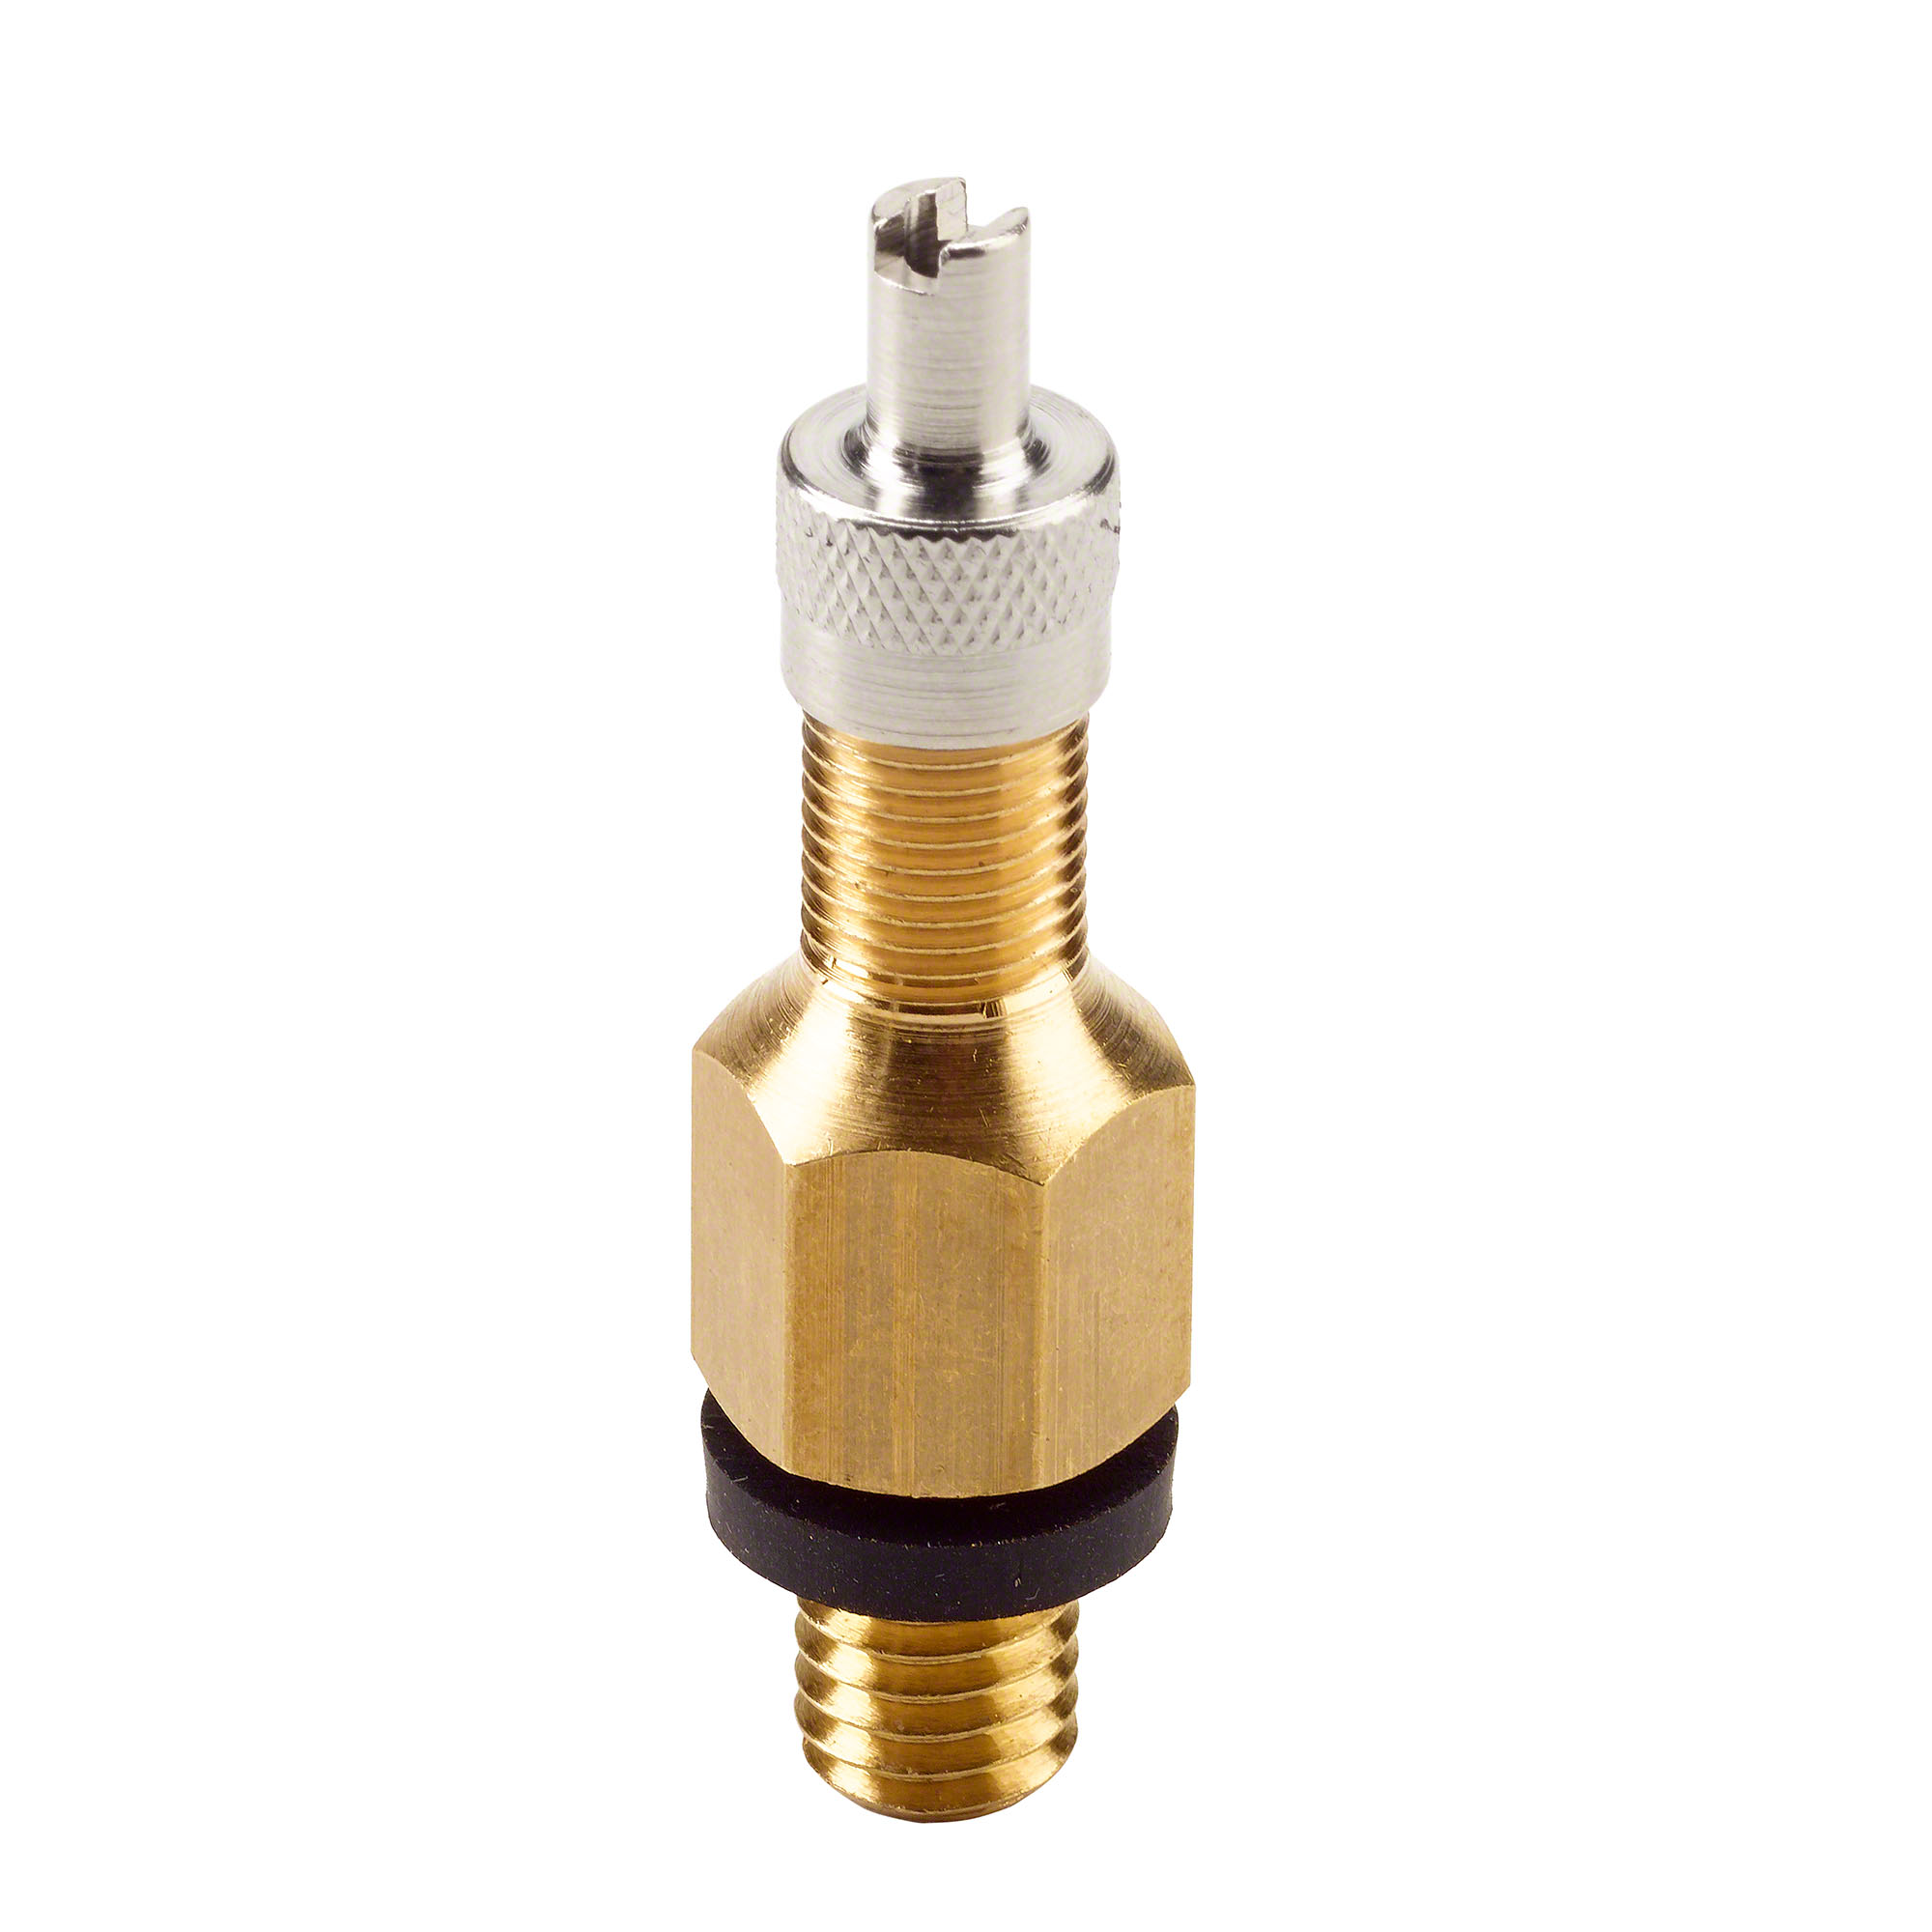 Threaded connection - for screw-in valve, 8V1, M8, key valve cap